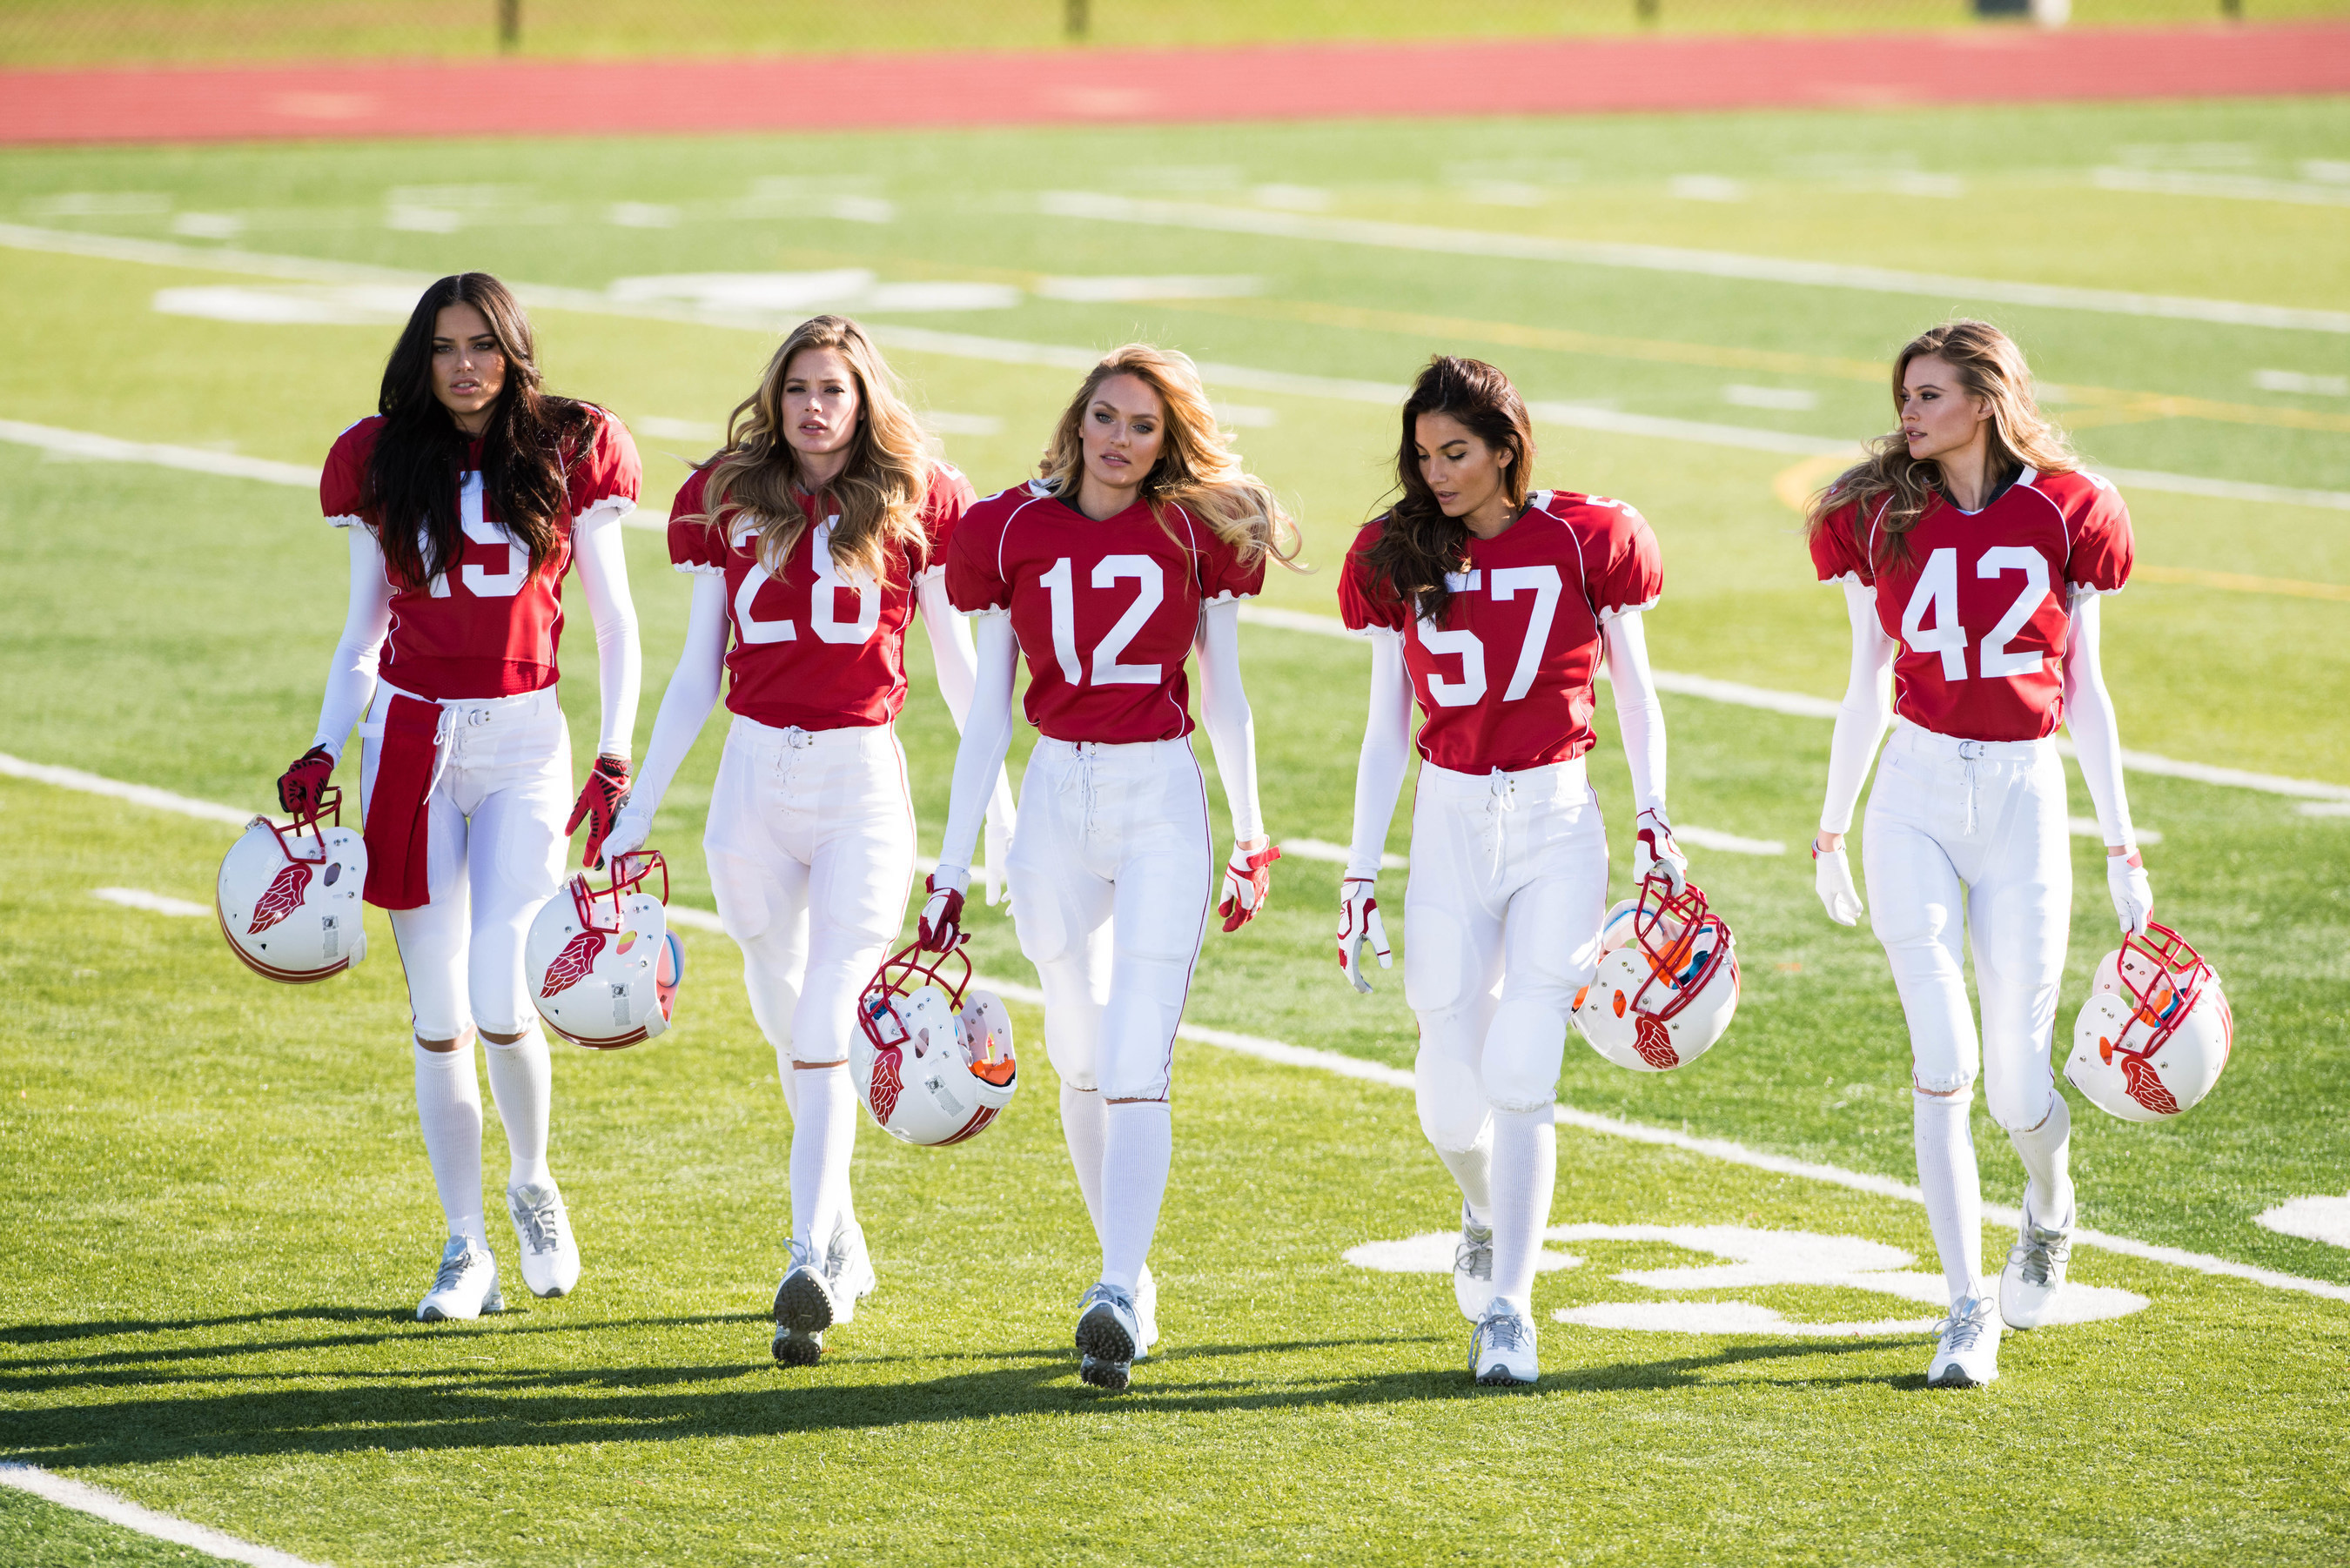 Victoria's Secret To Advertise In Super Bowl XLIX